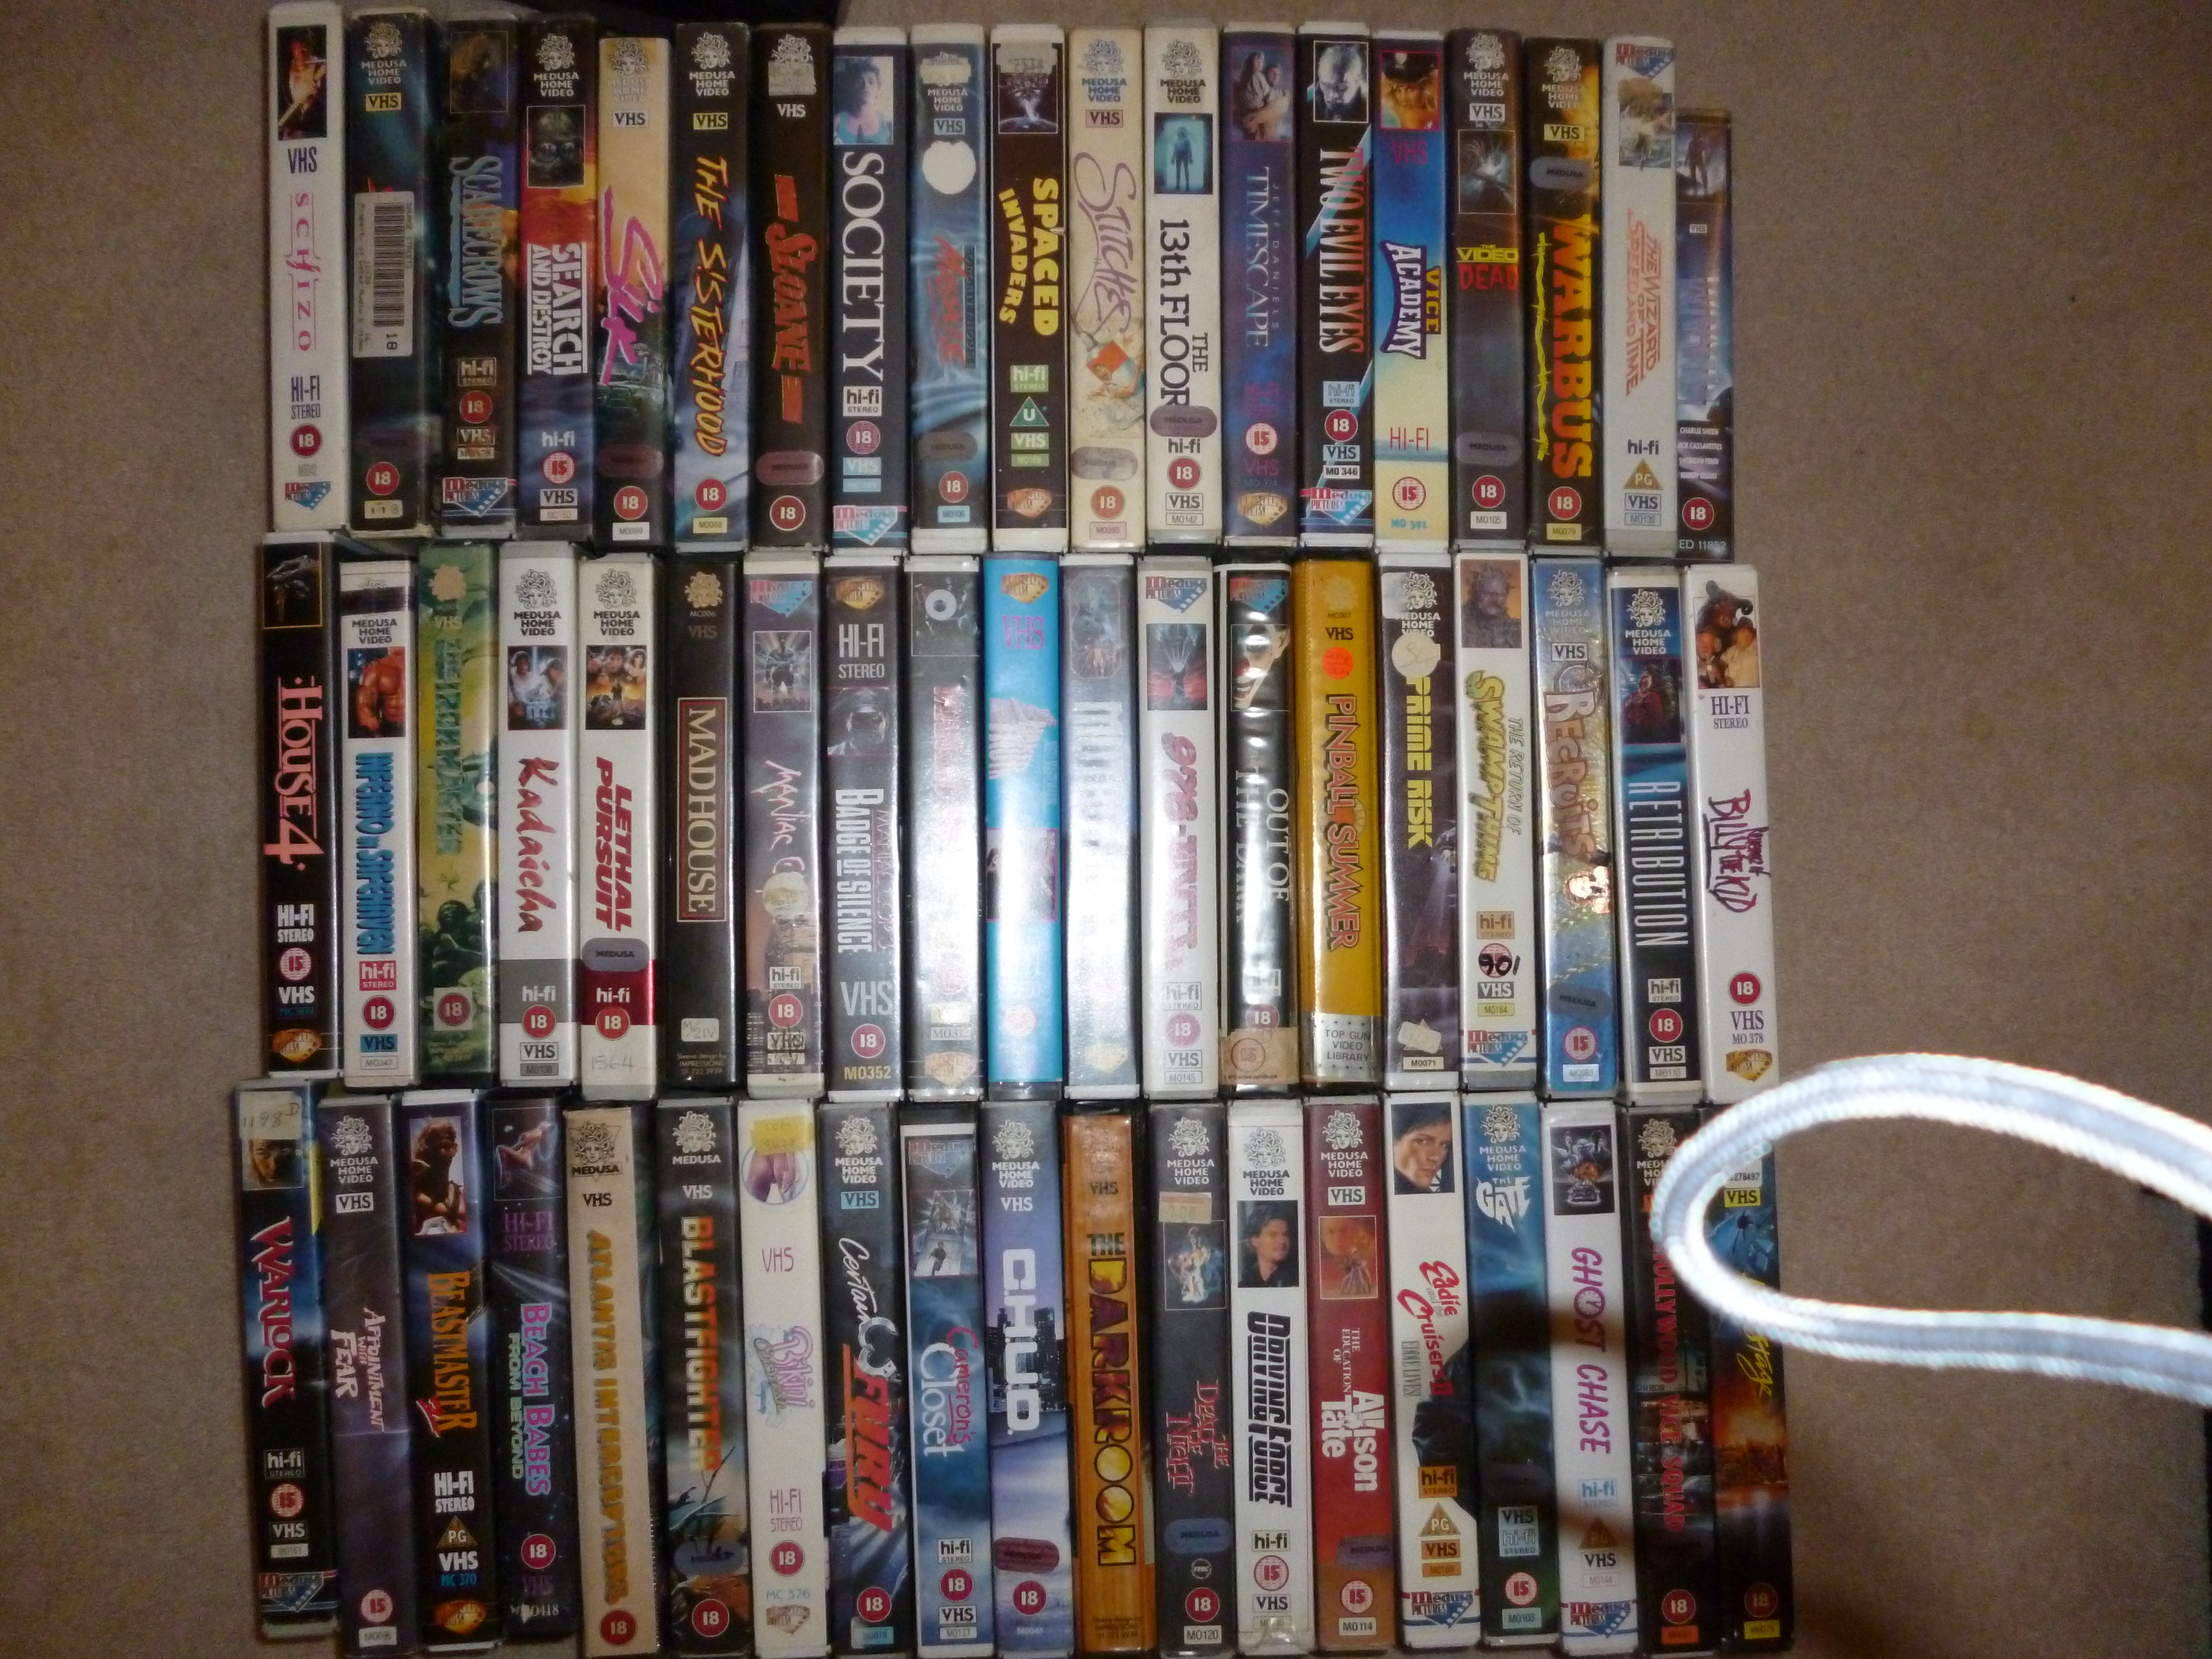 Программа телеканала vhs. VHS GOLDSTAR видеокассета. Видеосервис VHS 2000. Видеокассета VHS пятый элемент. Видеосервис VHS 2003.